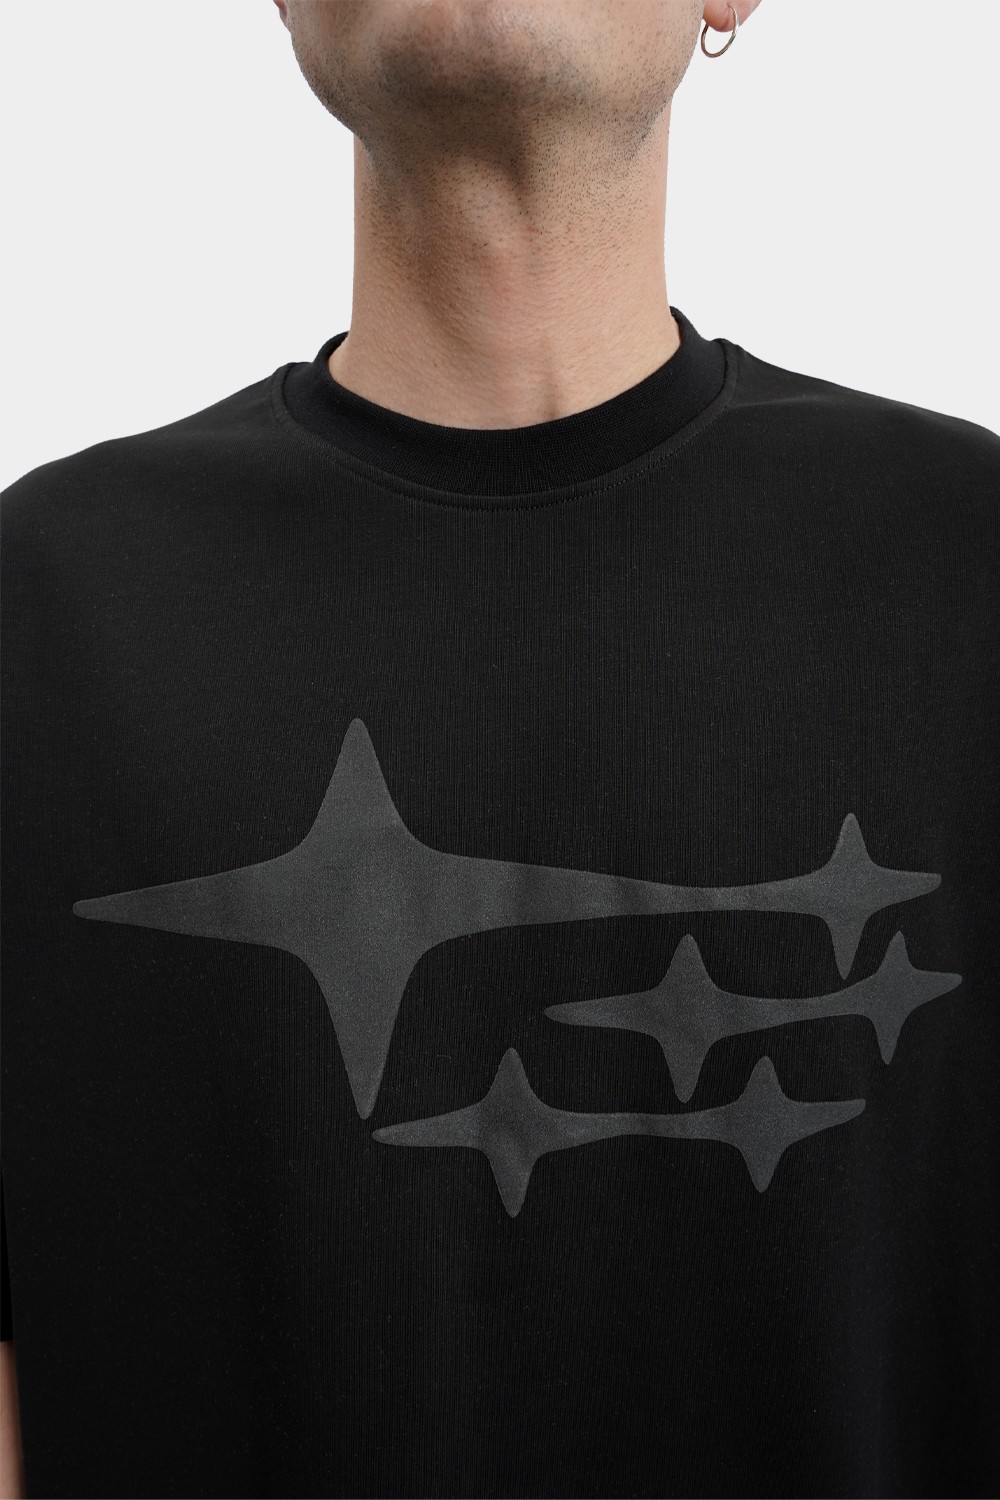 Sohigh Puffer Stars T-Shirt (SHT-9)